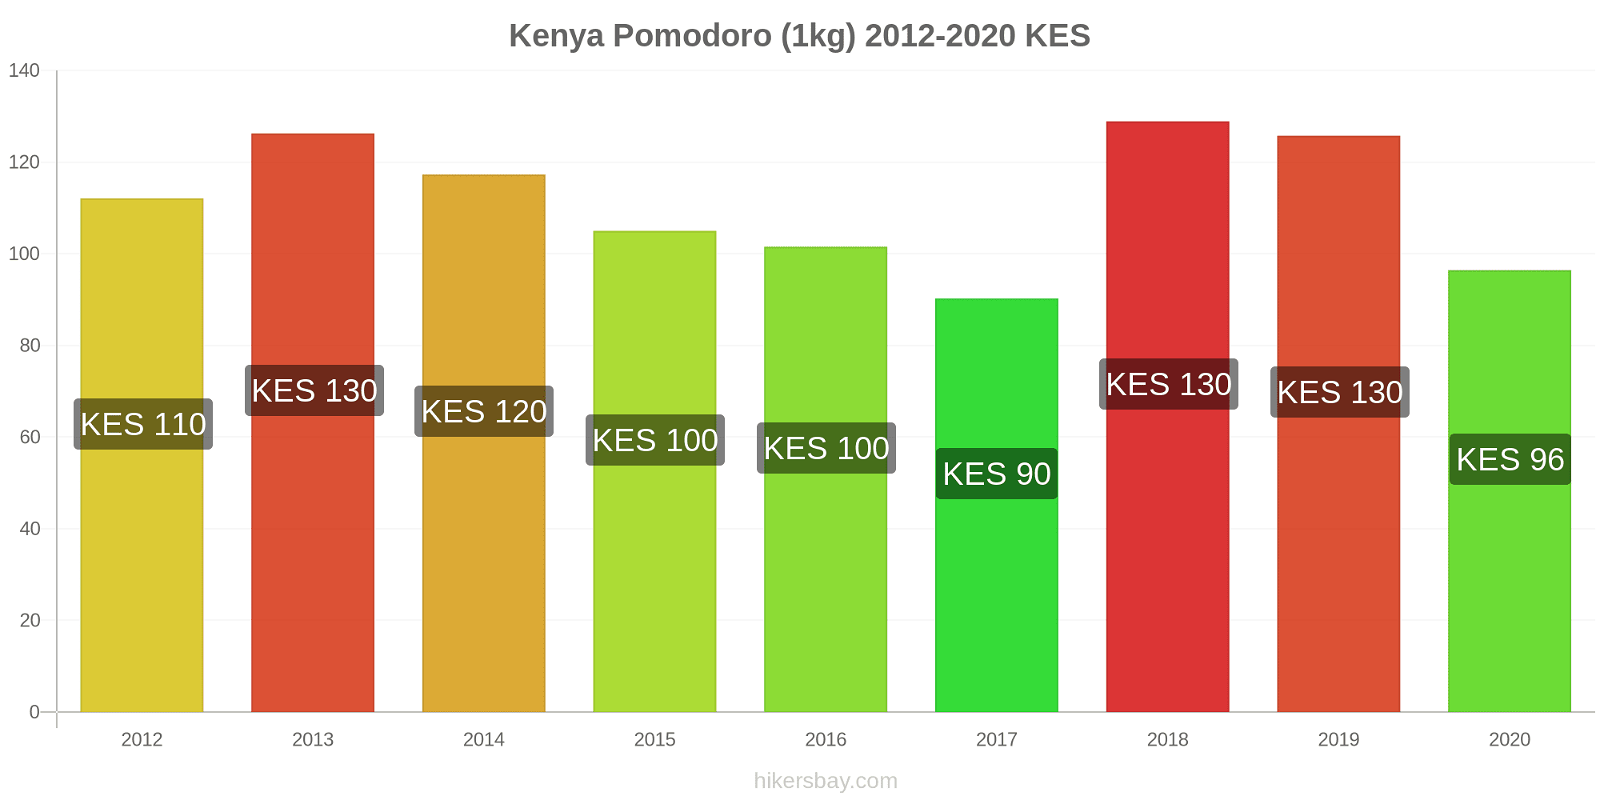 Kenya variazioni di prezzo Pomodoro (1kg) hikersbay.com